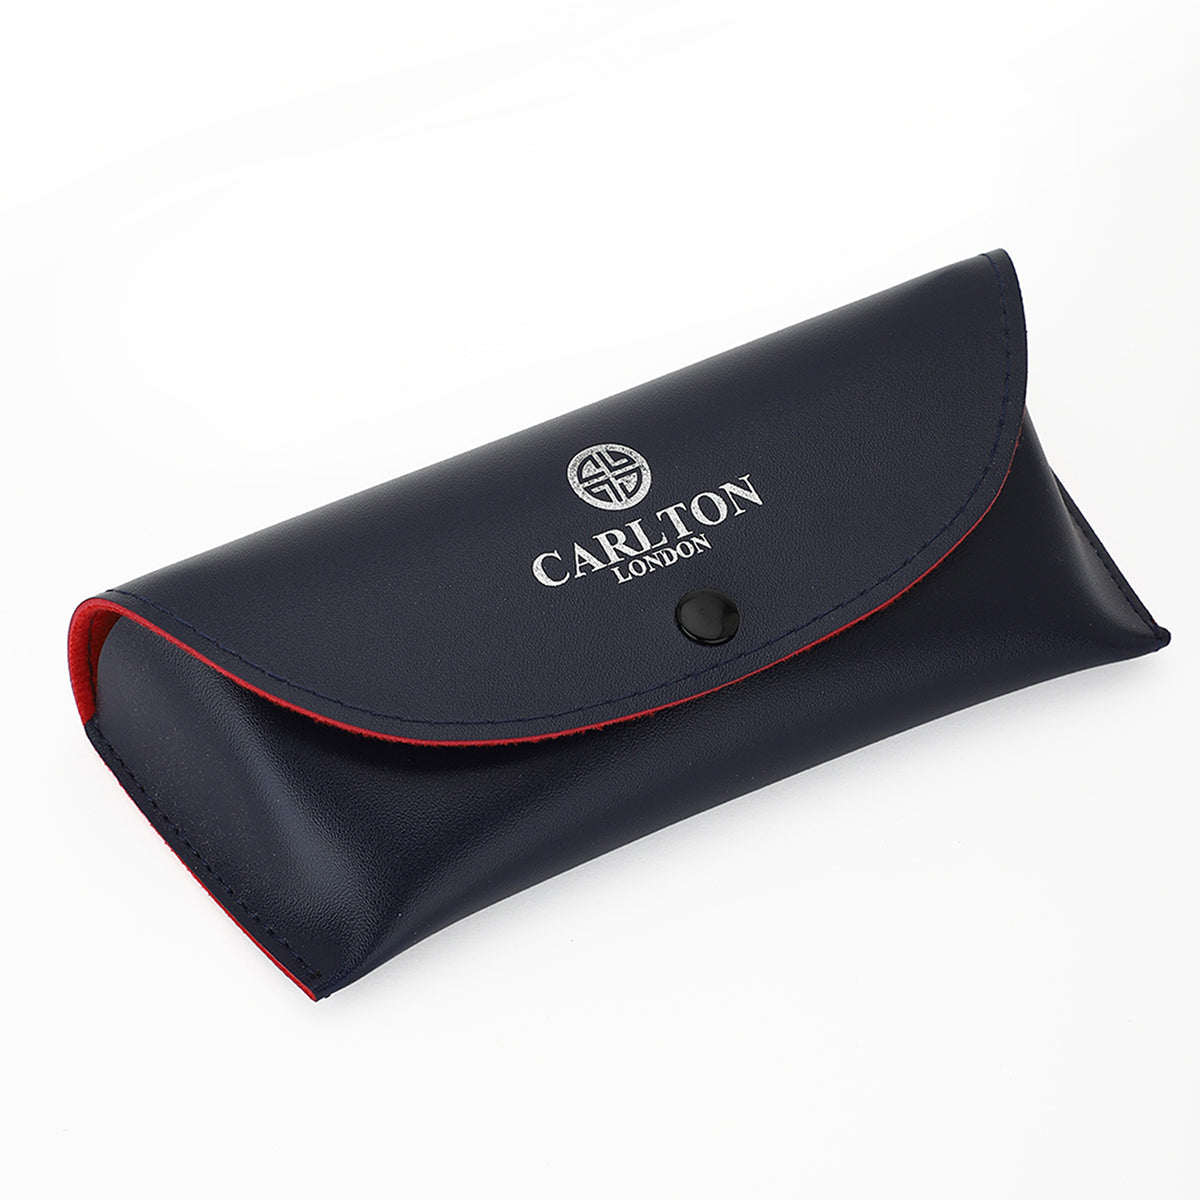 Carlton London Silver Toned Uv Protected Cateye Sunglasses For Women